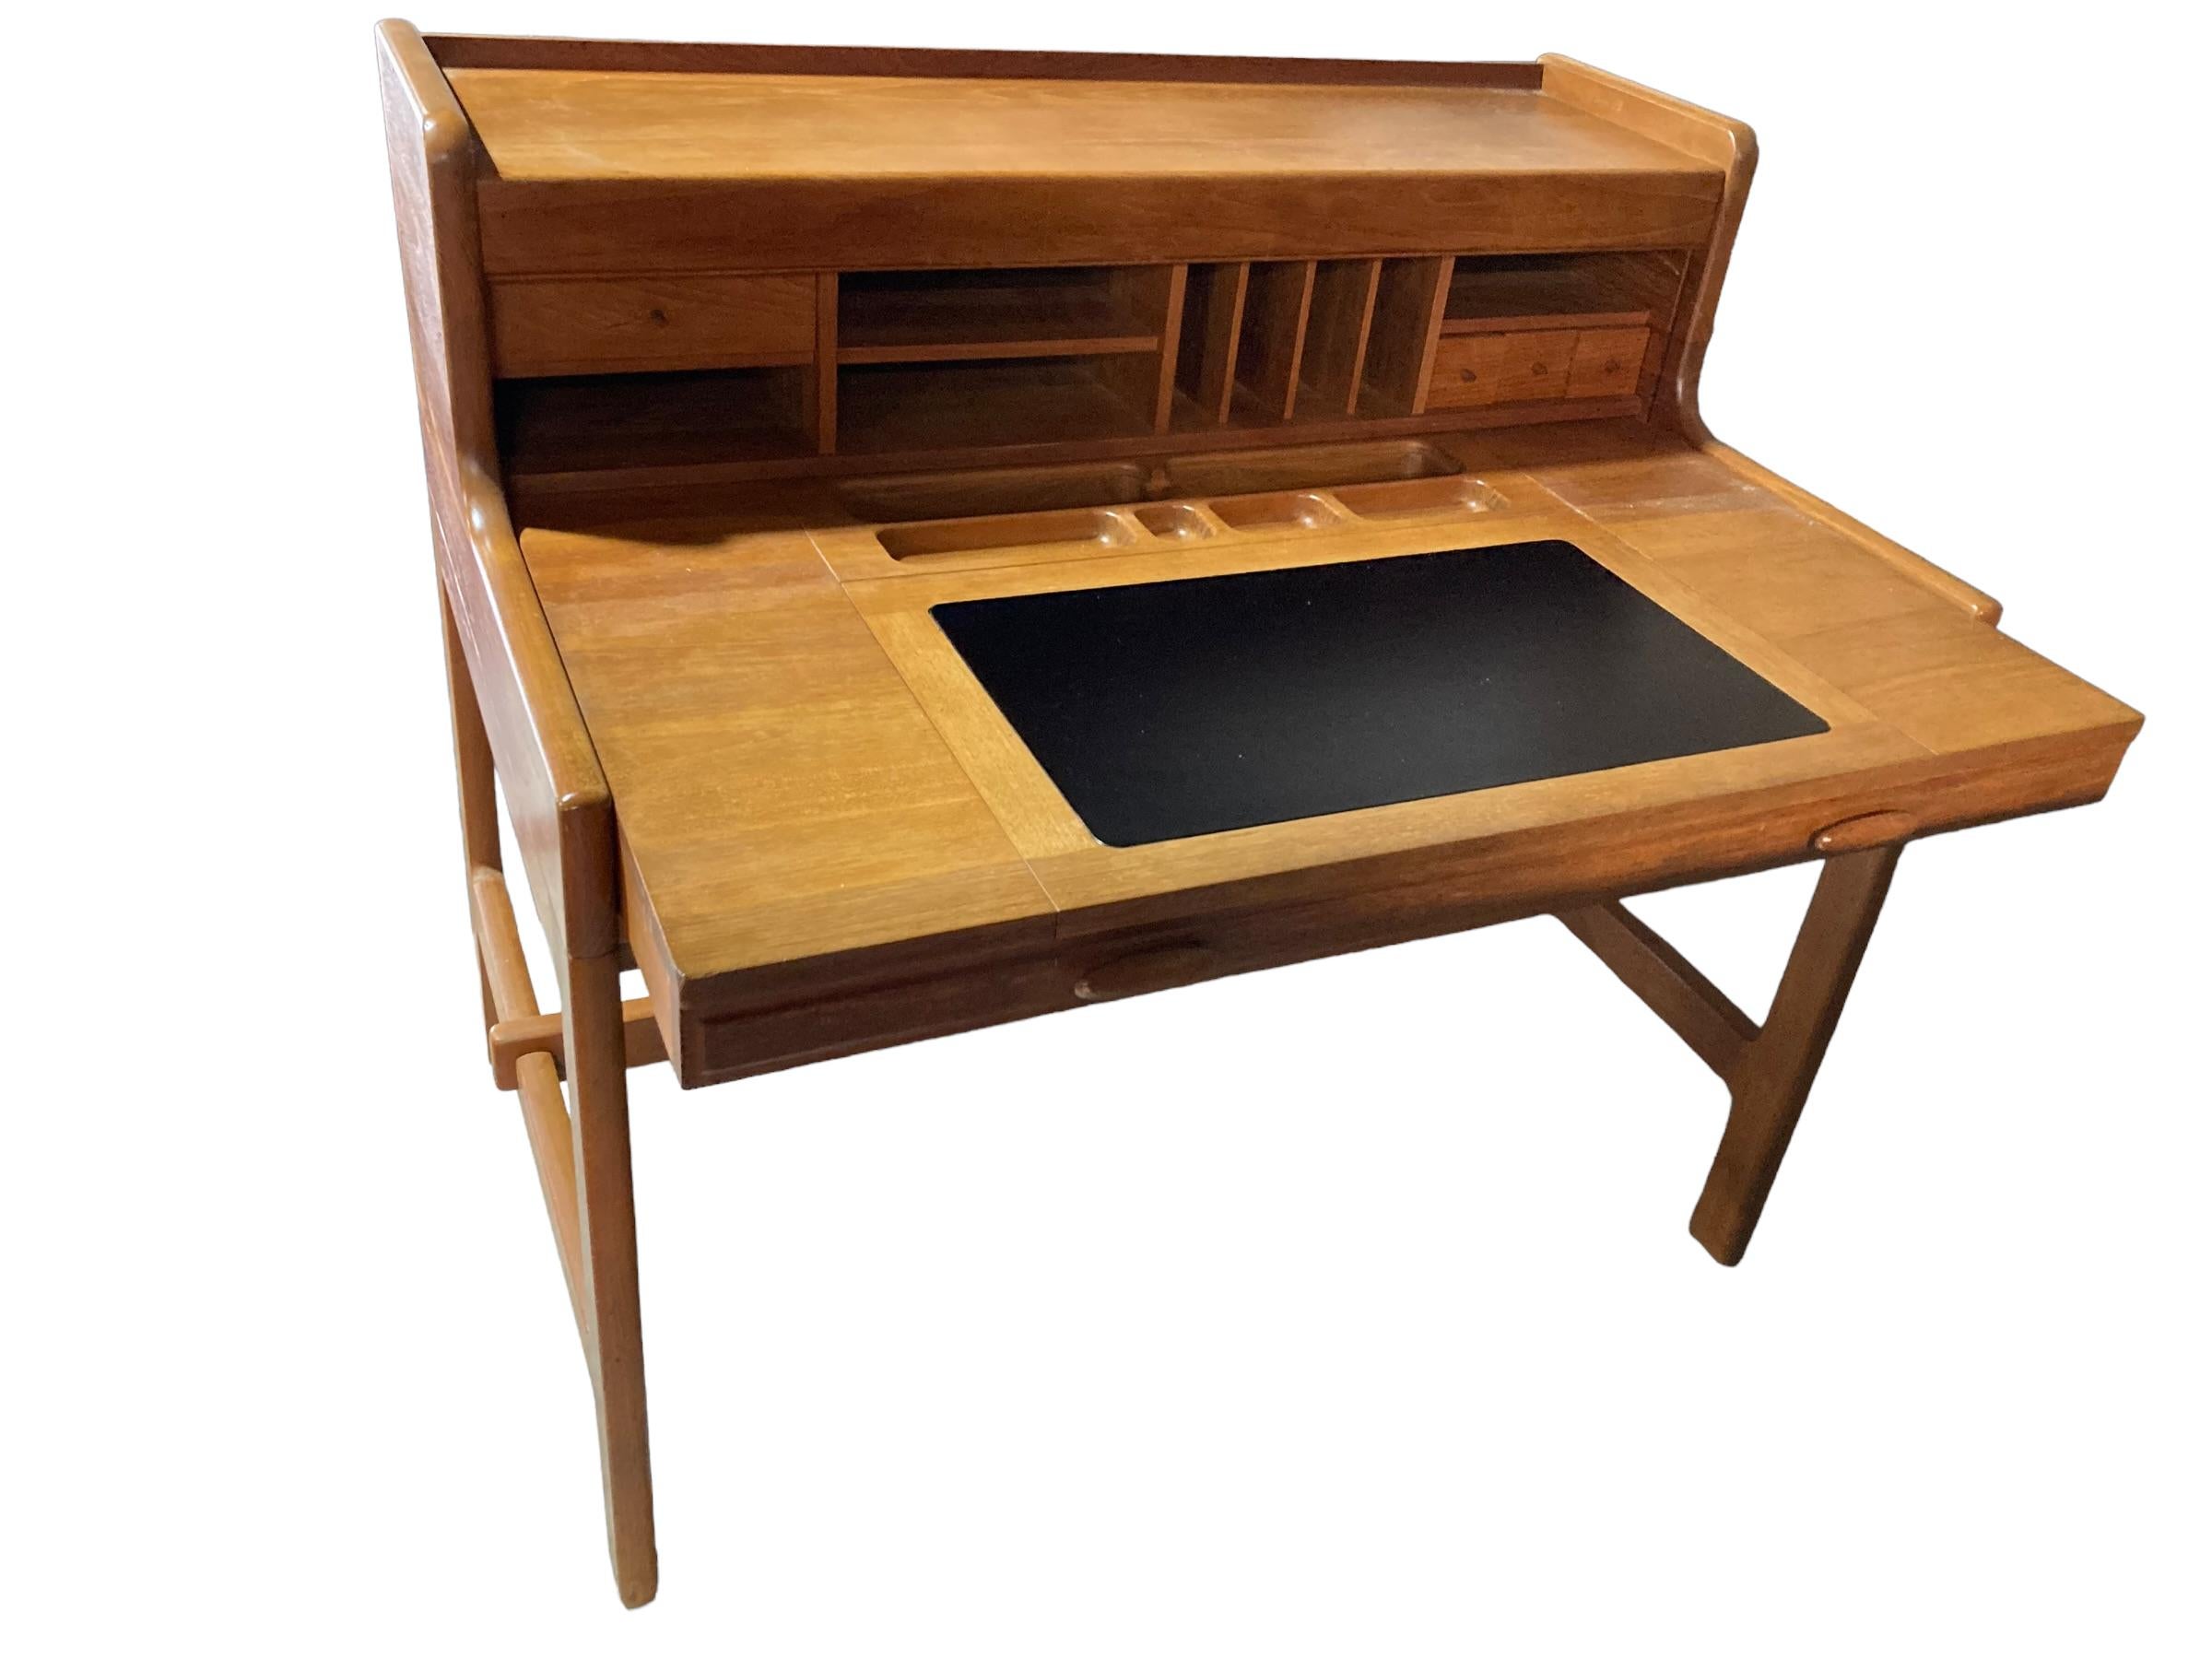 Carved Mid-Century Modern Desk Designed by John Mortensen and Manufactured for Dyrlund